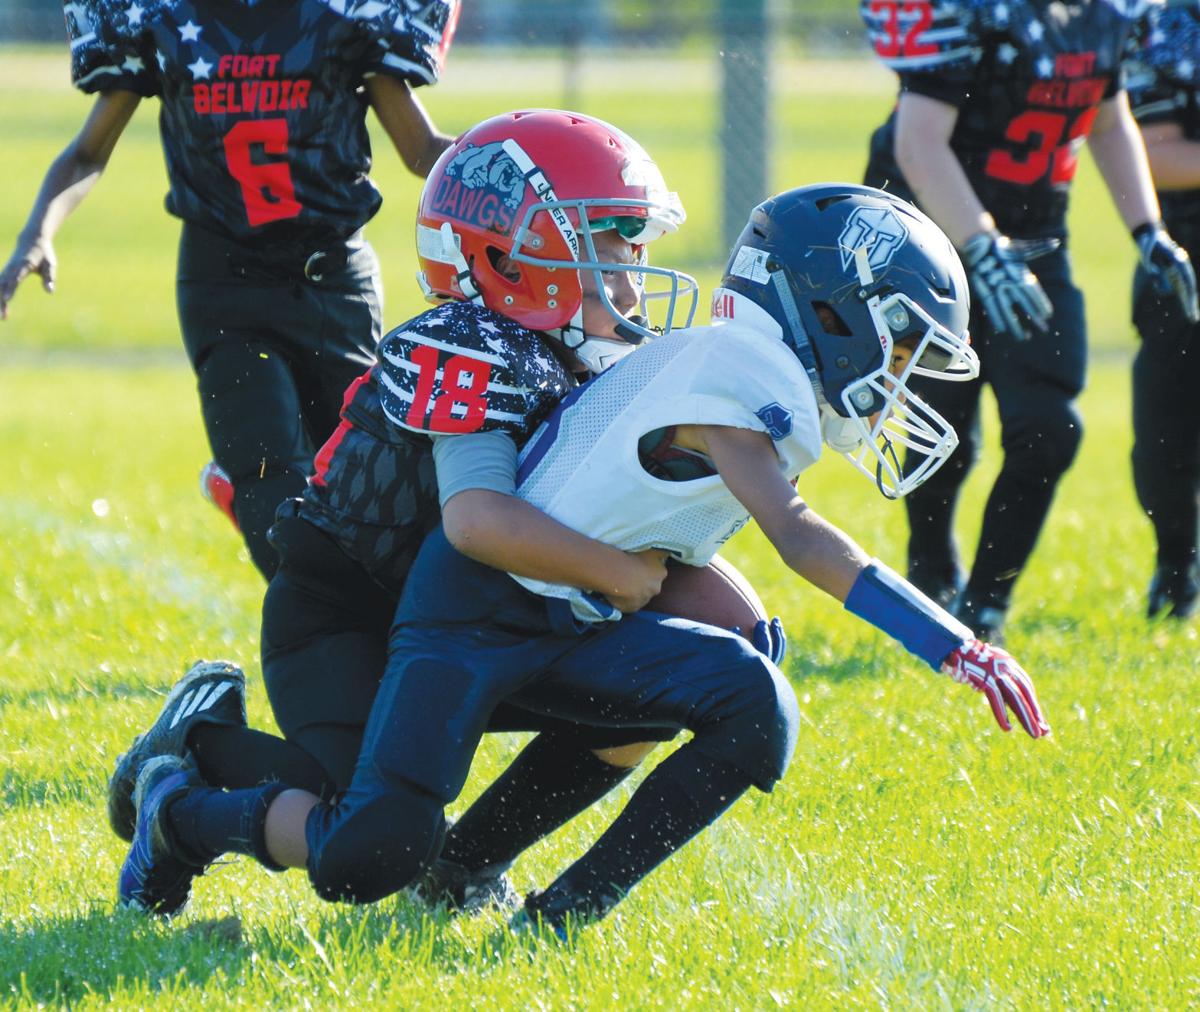 Fort Belvoir Bulldogs kick off youth football season | Lifestyles ...